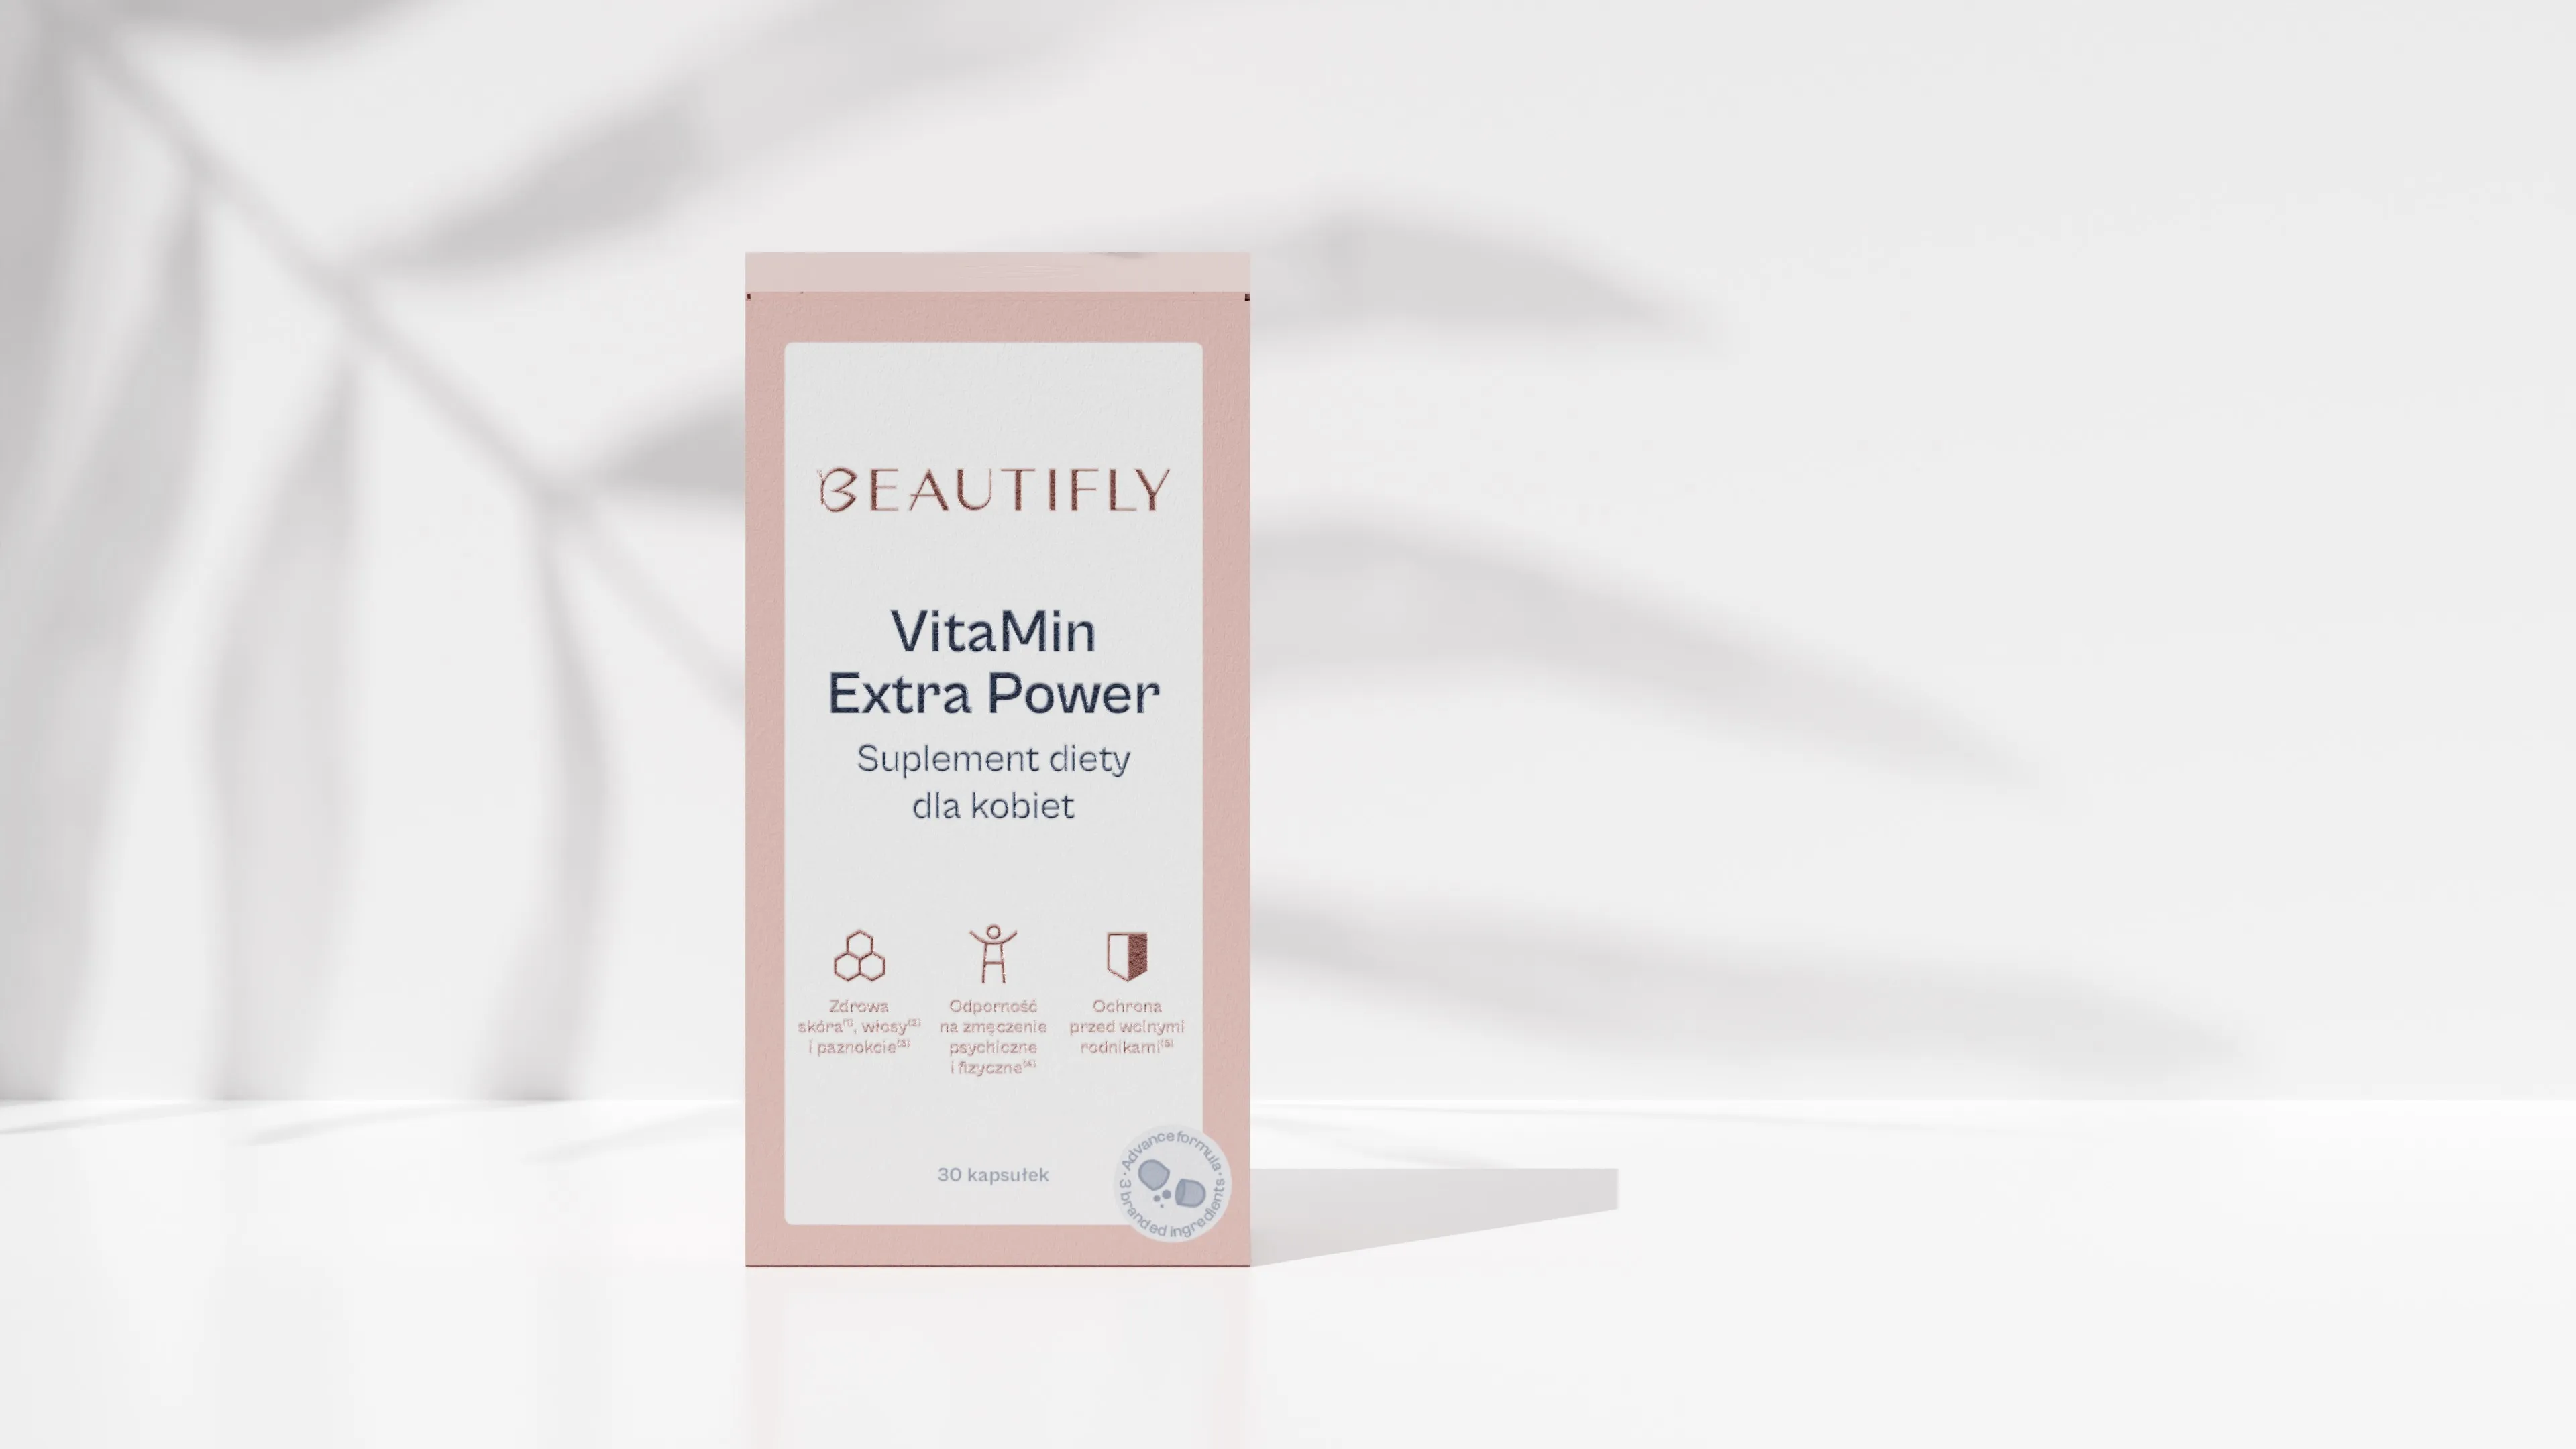 Beautifly VitaMin Extra Power dla kobiet, 30 kapsułek 